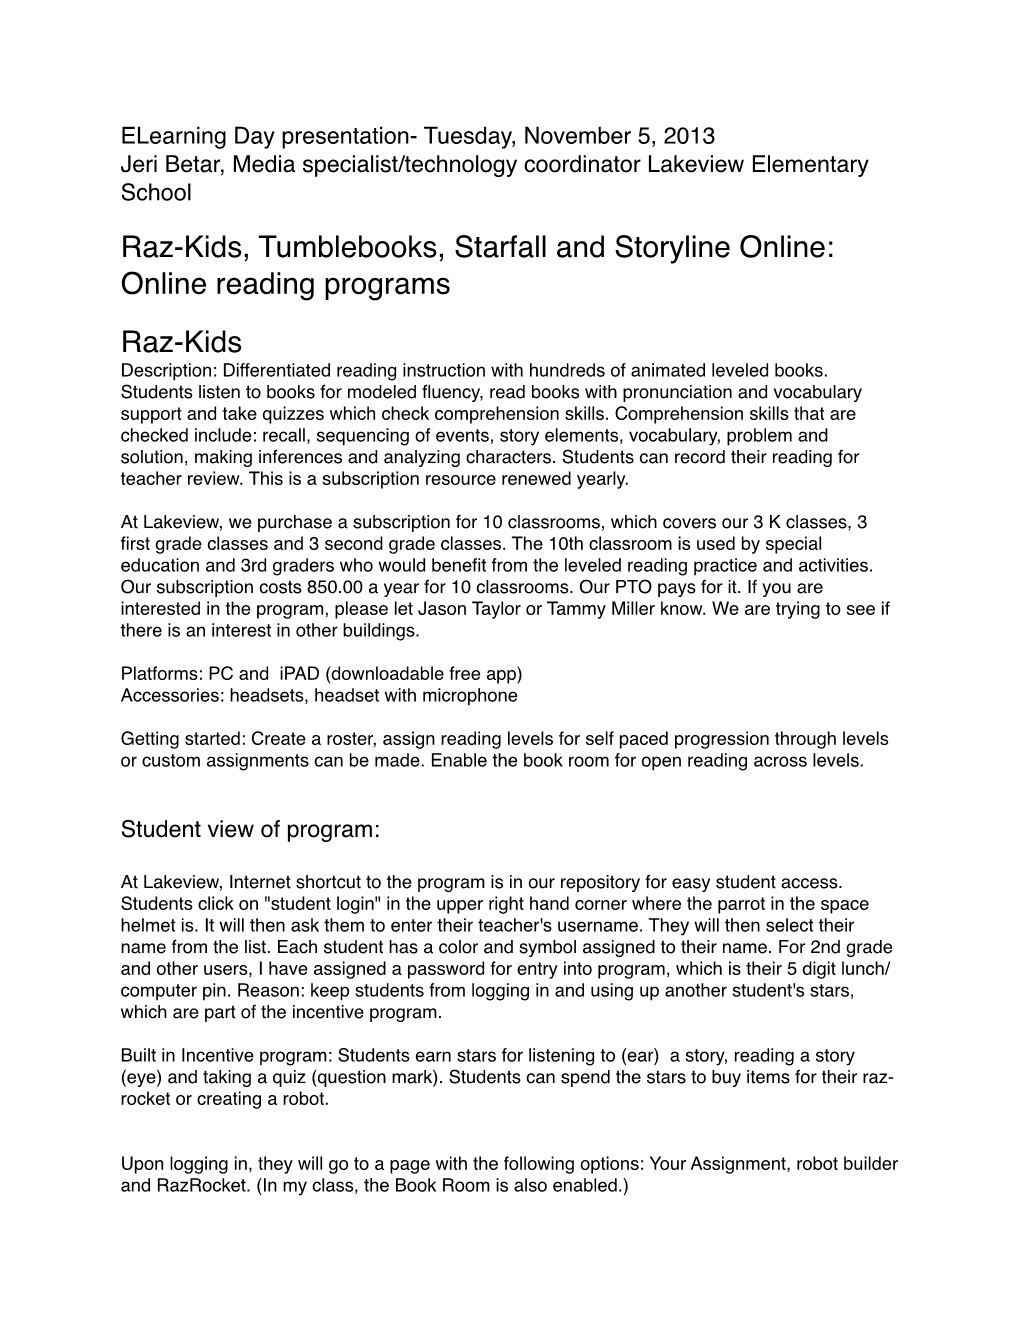 Raz-Kids, Tumblebooks, Starfall and Storyline Online: Online Reading Programs